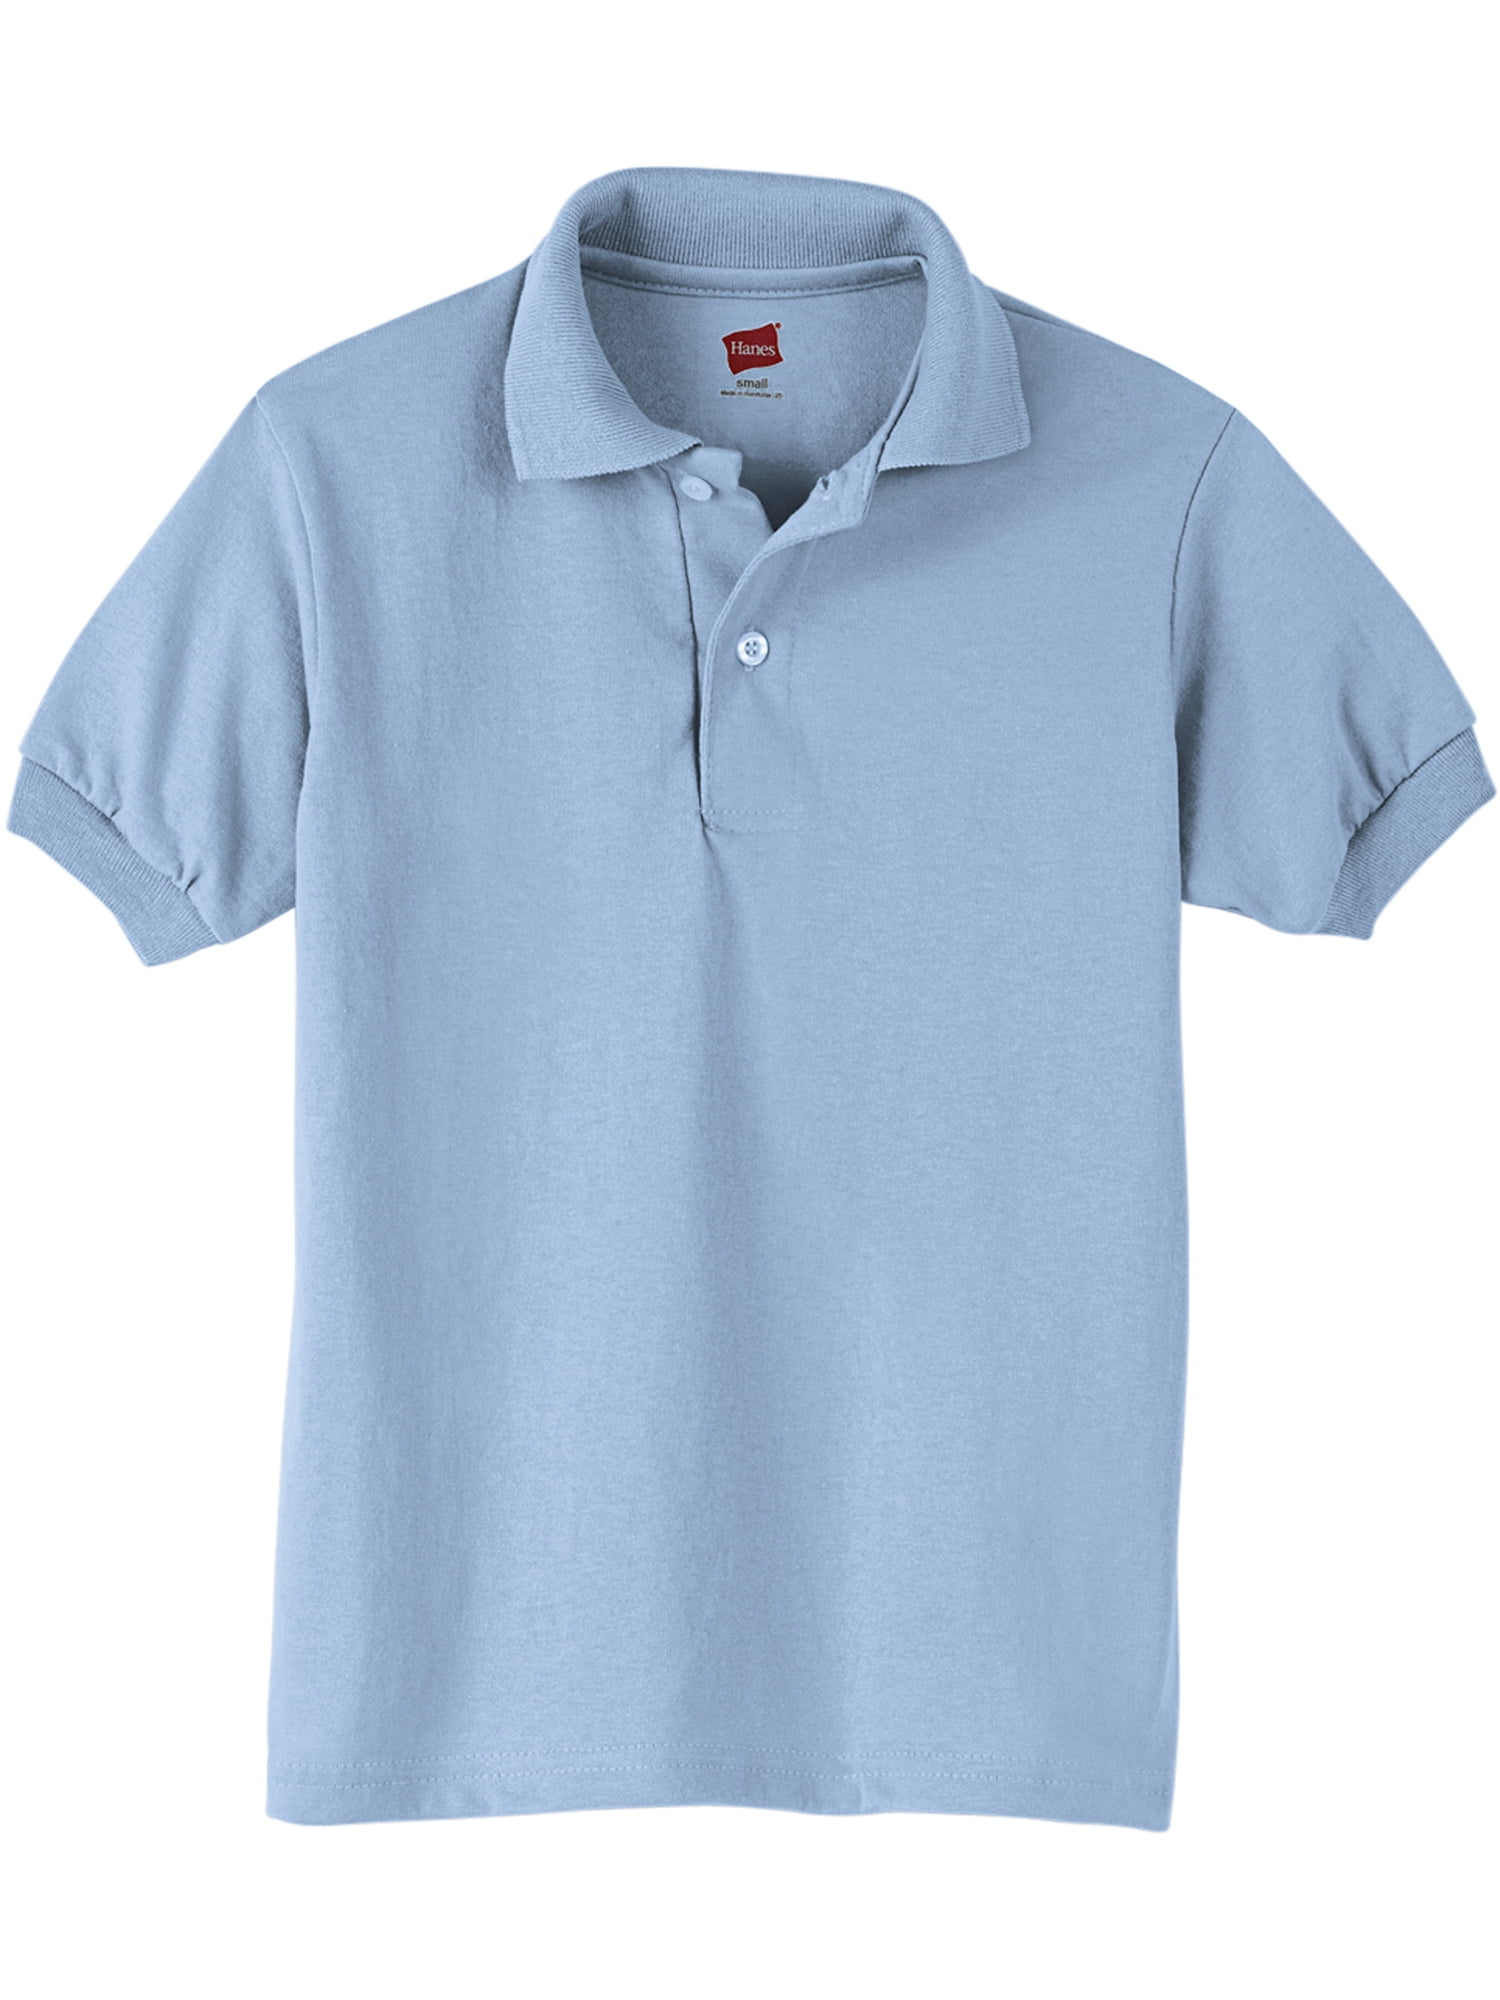 18% OFF Boston Bruins Polo Shirts Cheap For Men – 4 Fan Shop